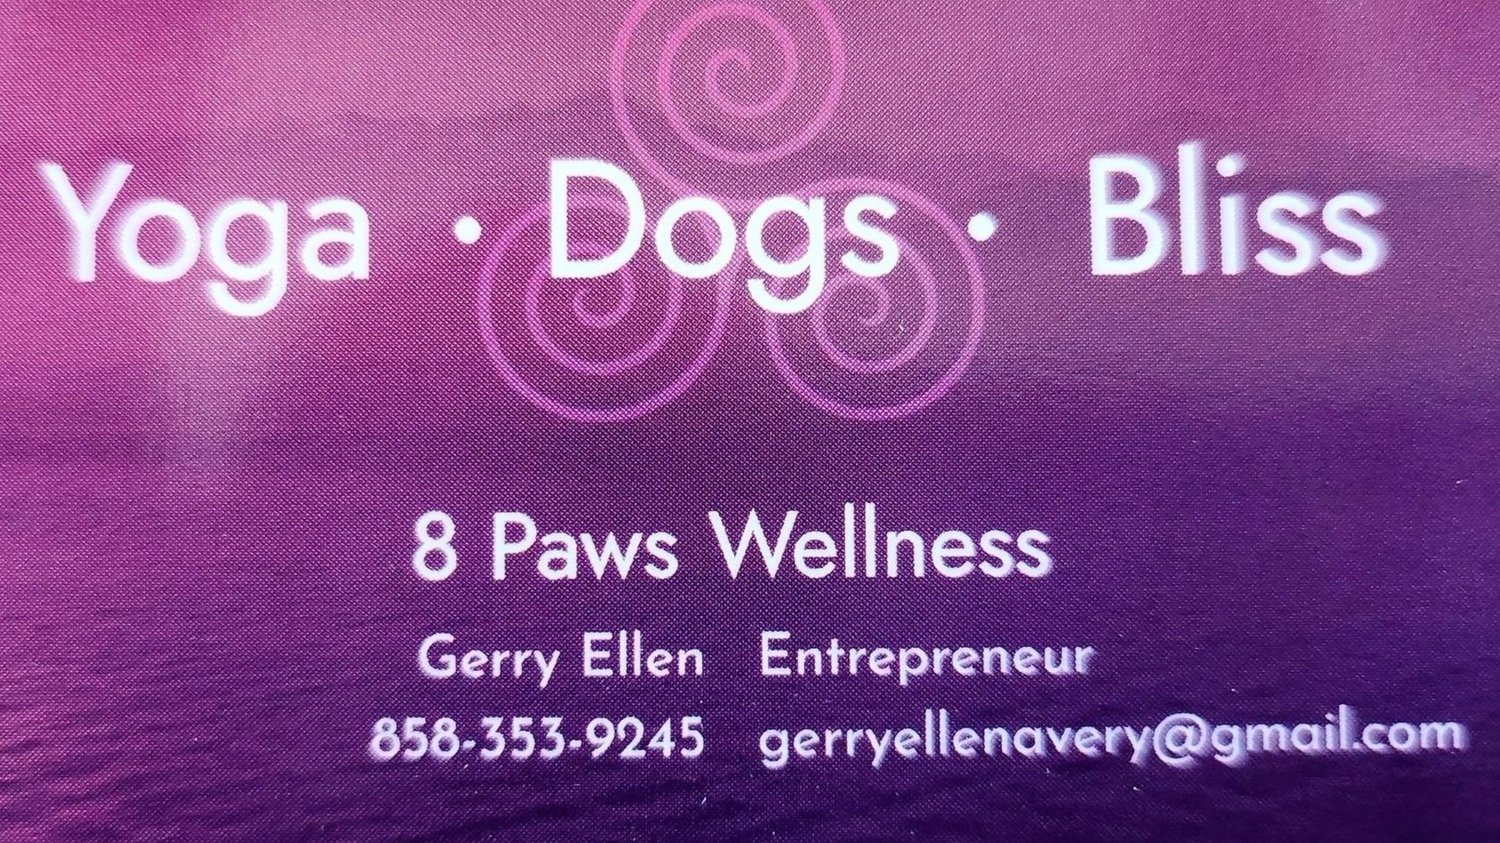 8 Paws Wellness with Gerry Ellen